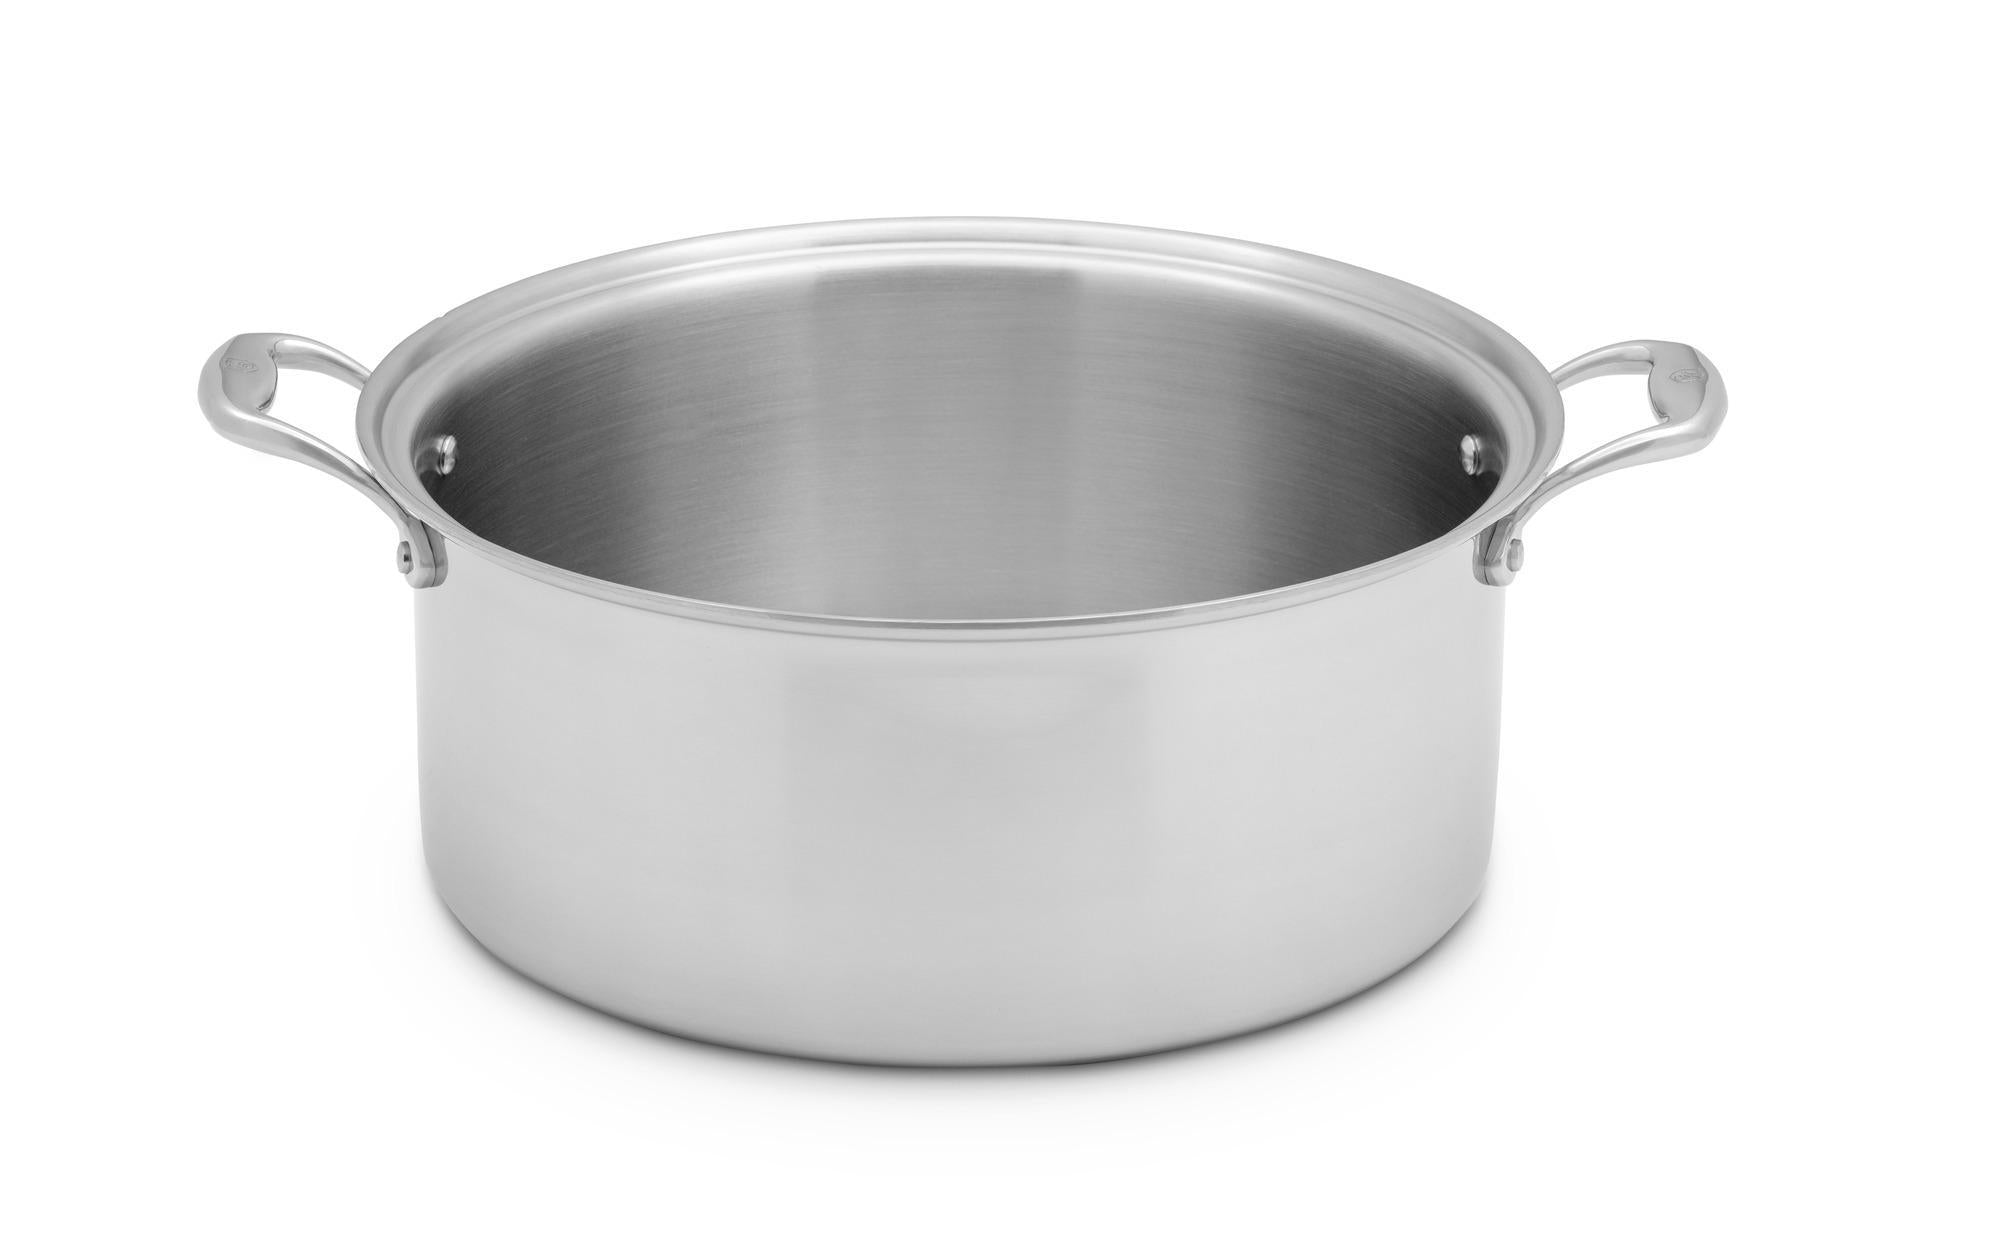 Double Boiler Pot 2.5 Quart Stainless Steel Sauce Pan Cookware